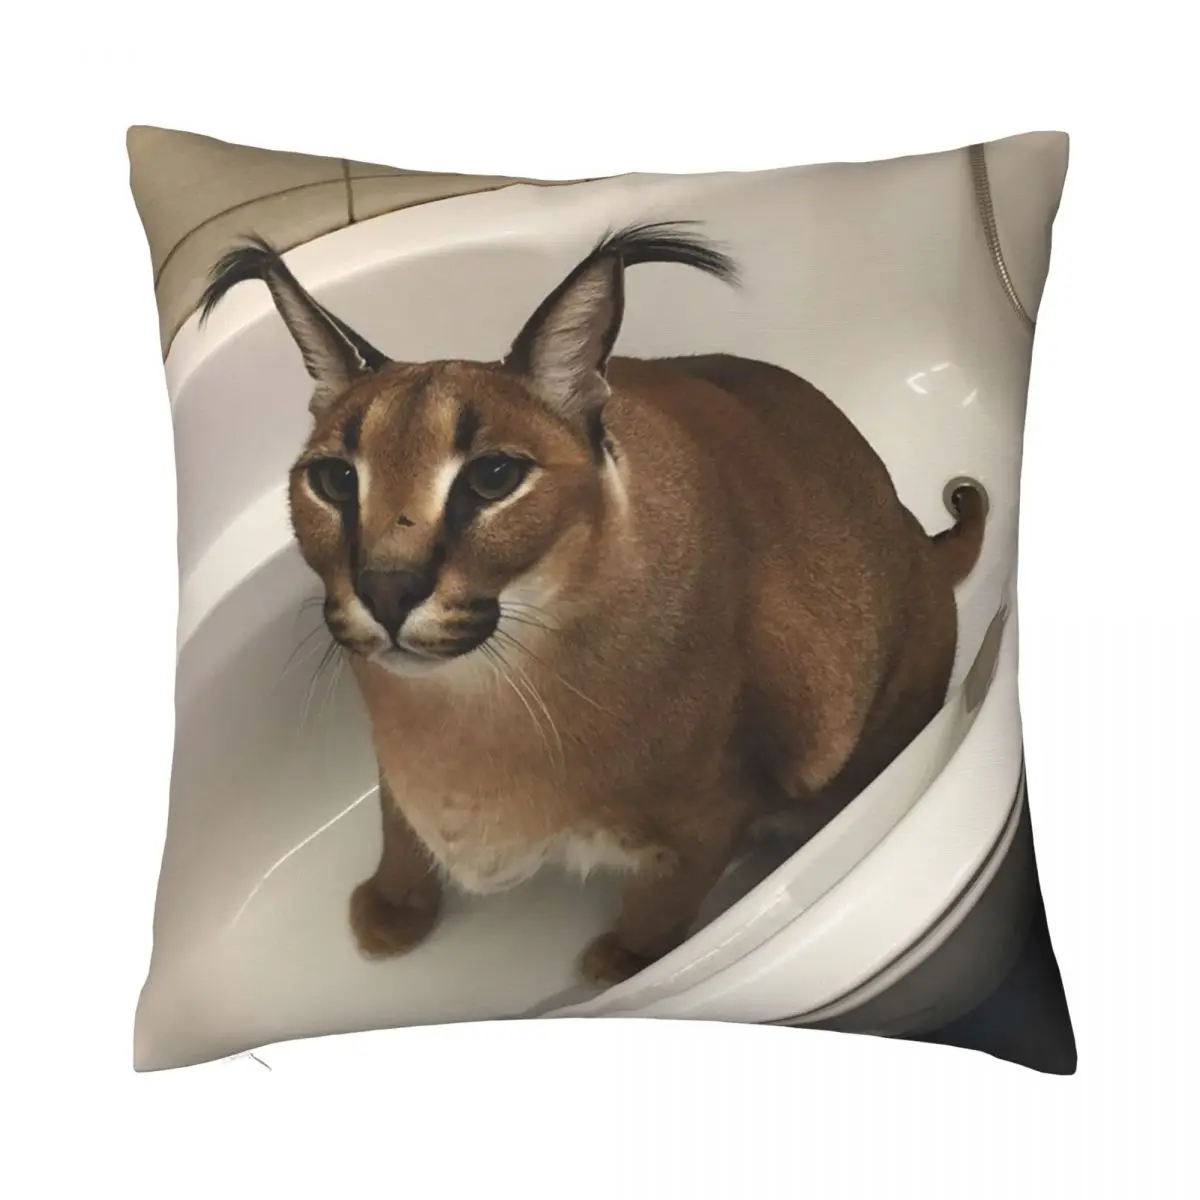 Floppa Cute Meme Cushion Cover 40x40 Home Decor Dakimakura Funny Caracal Cat Throw Pillow Case for Living Room Housse De Coussin